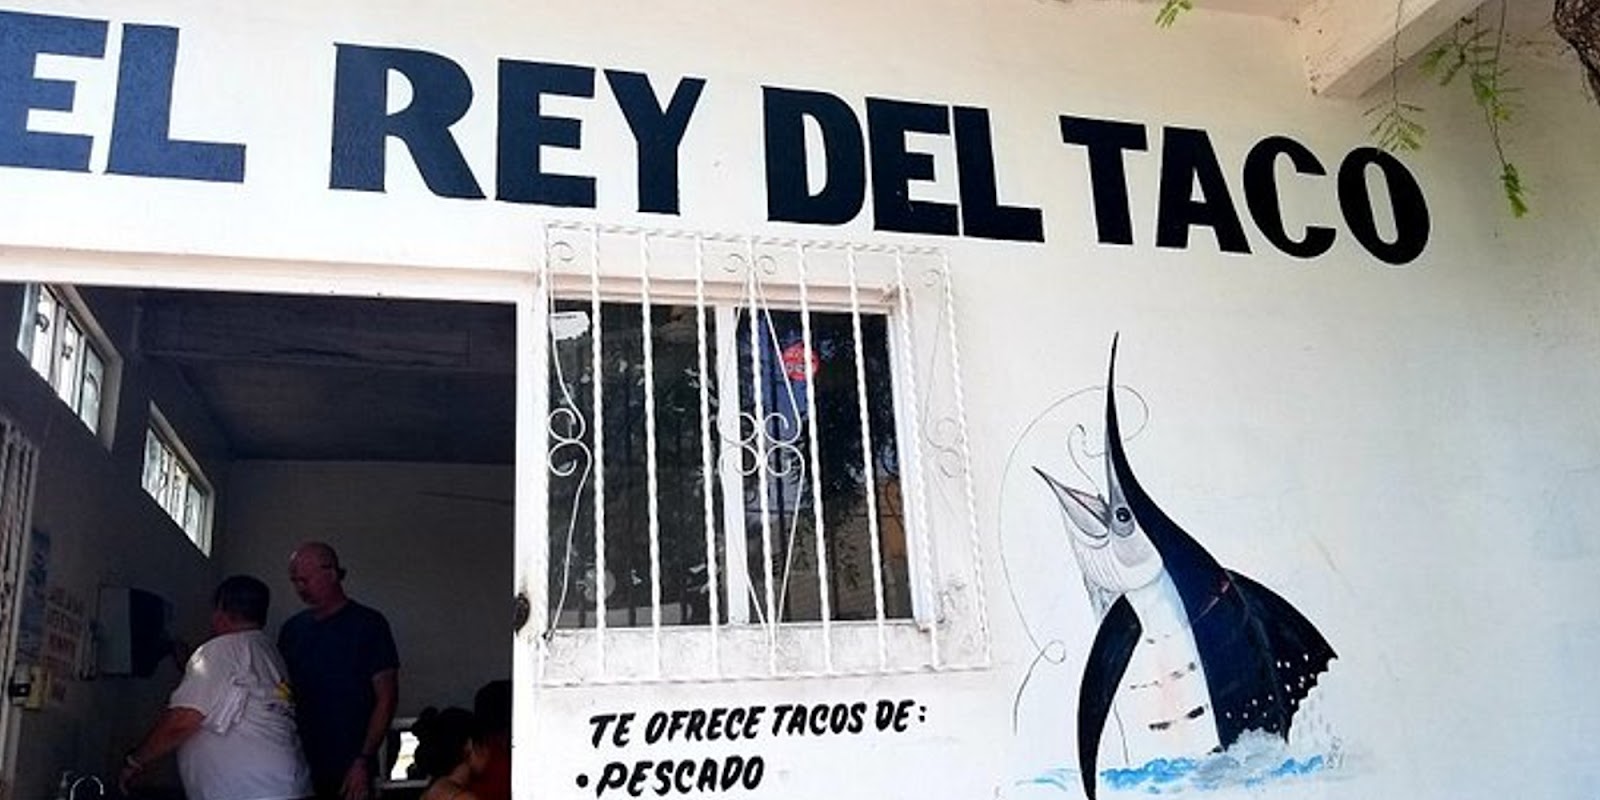 Outside of El Rey Del Taco - a popular local taco joint in Loreto, Baja California Sur